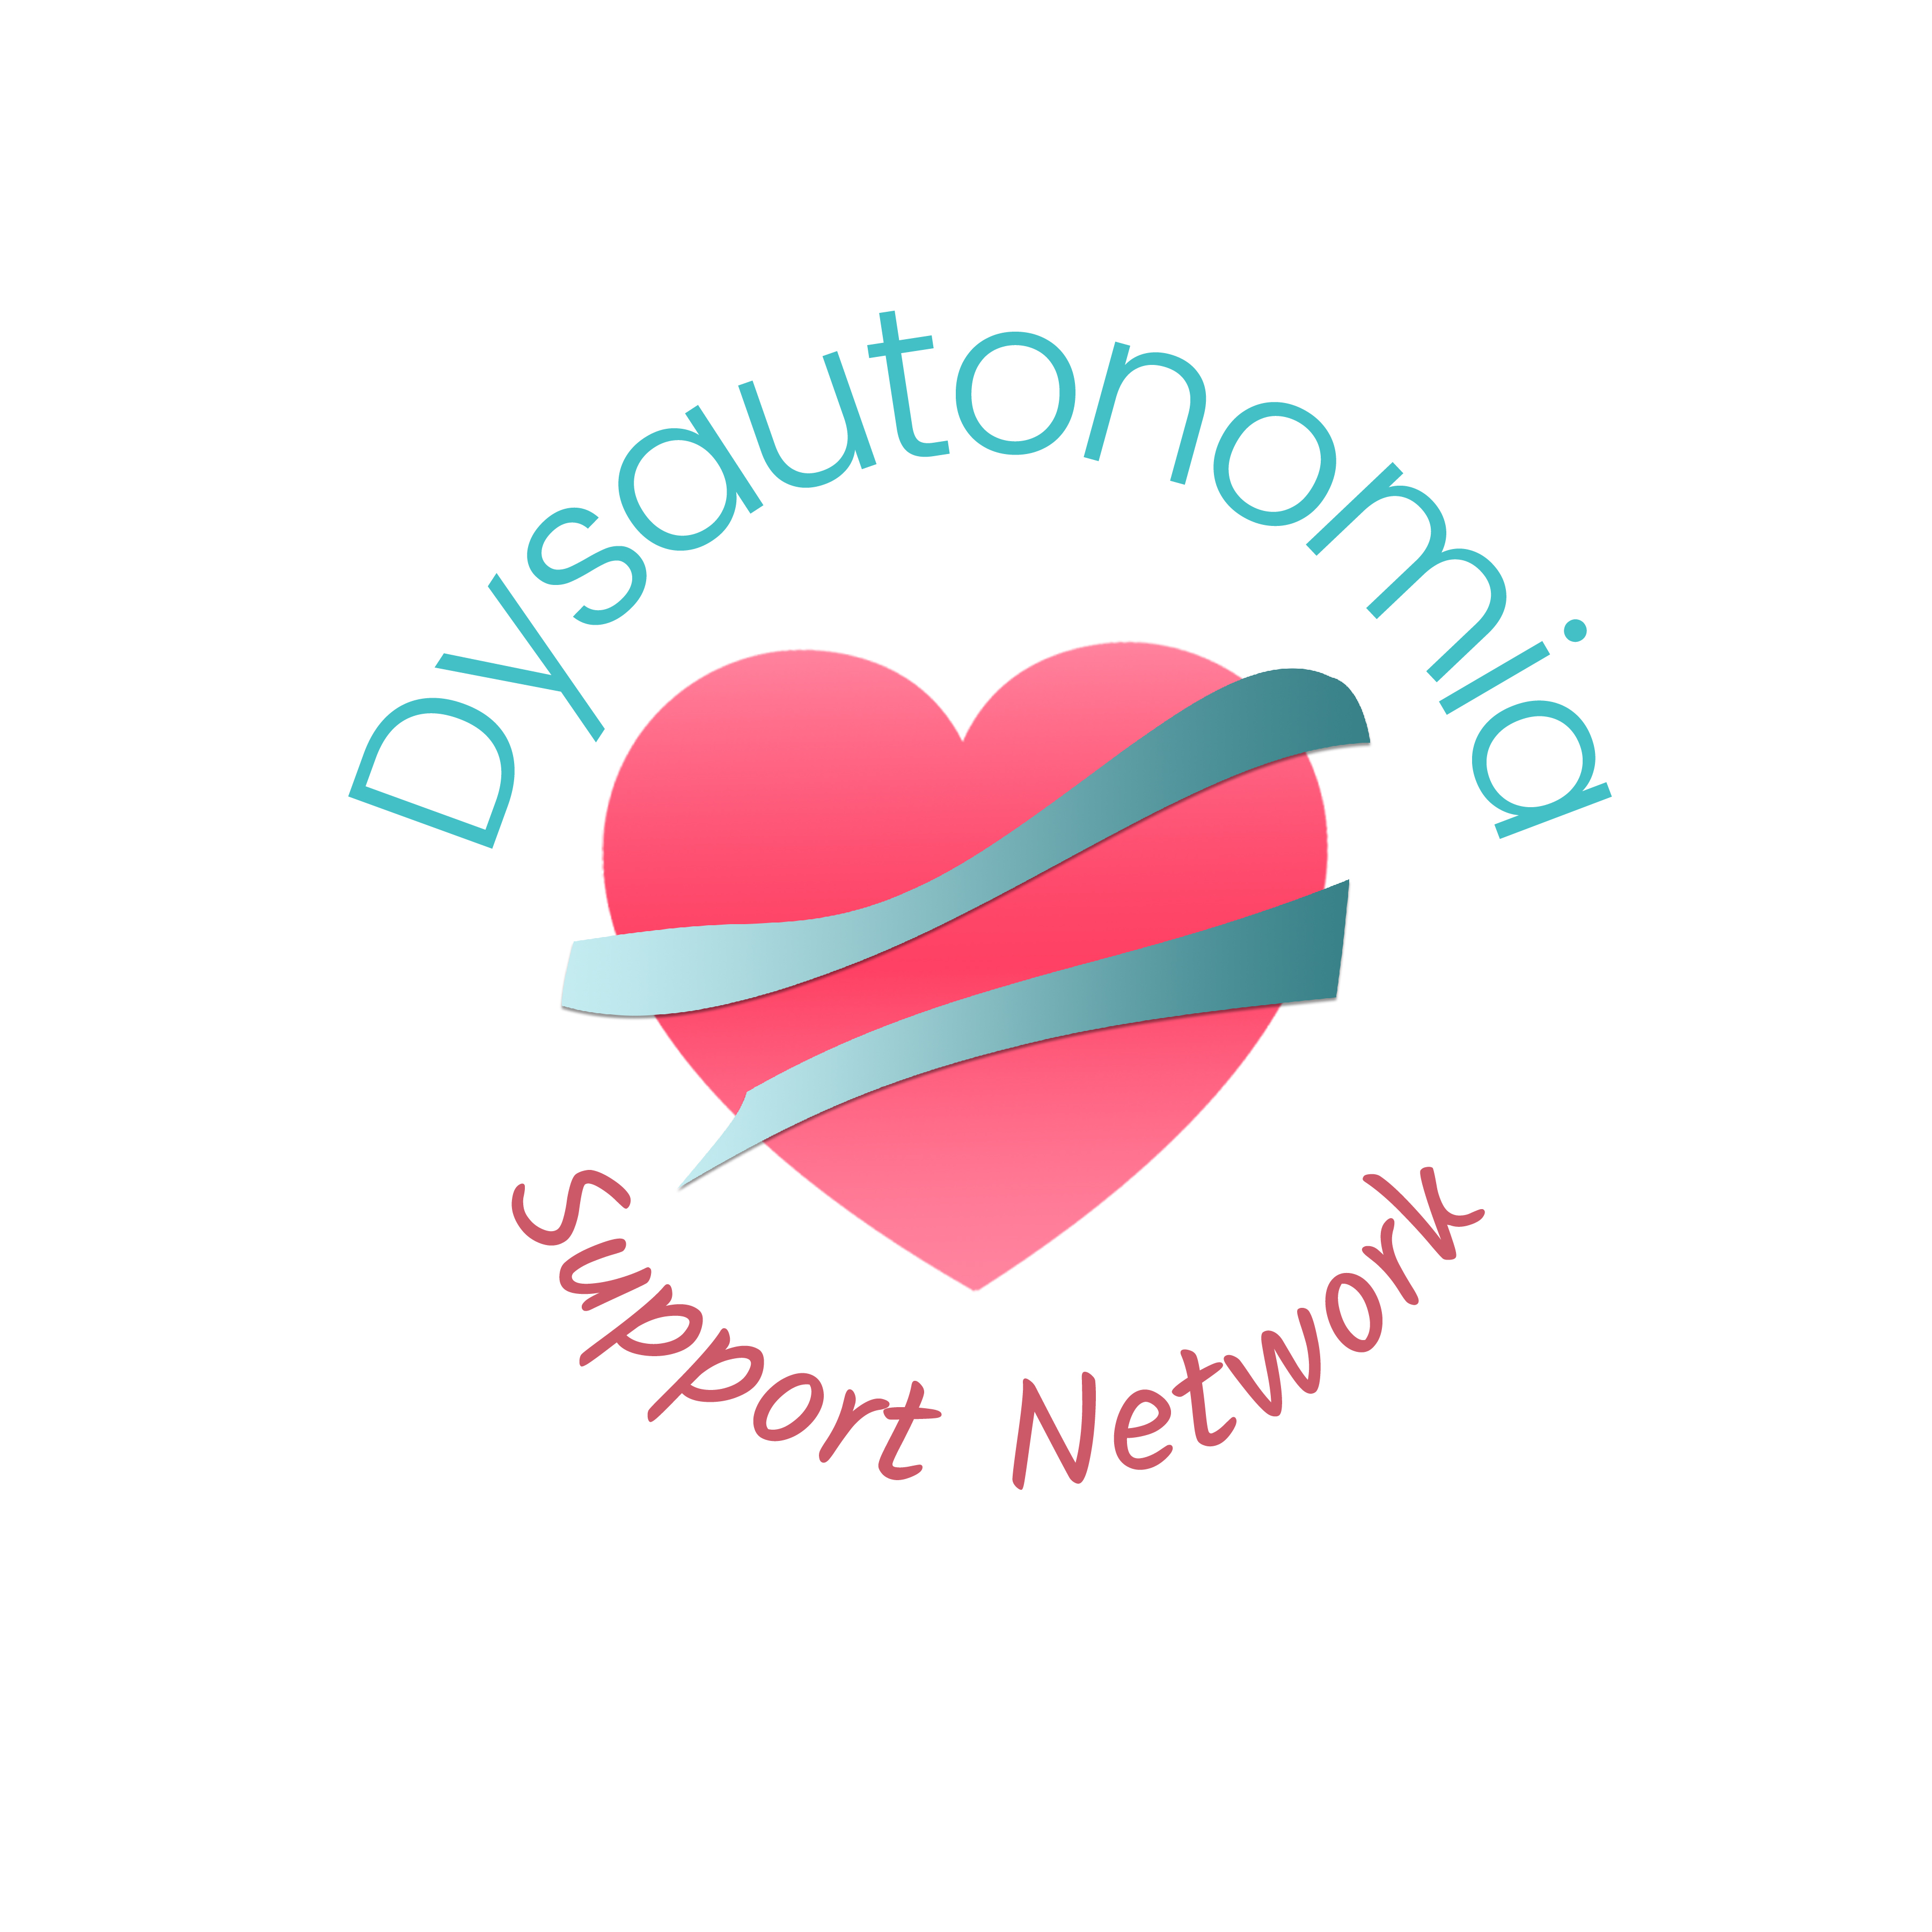 Dysautonomia Support Network logo